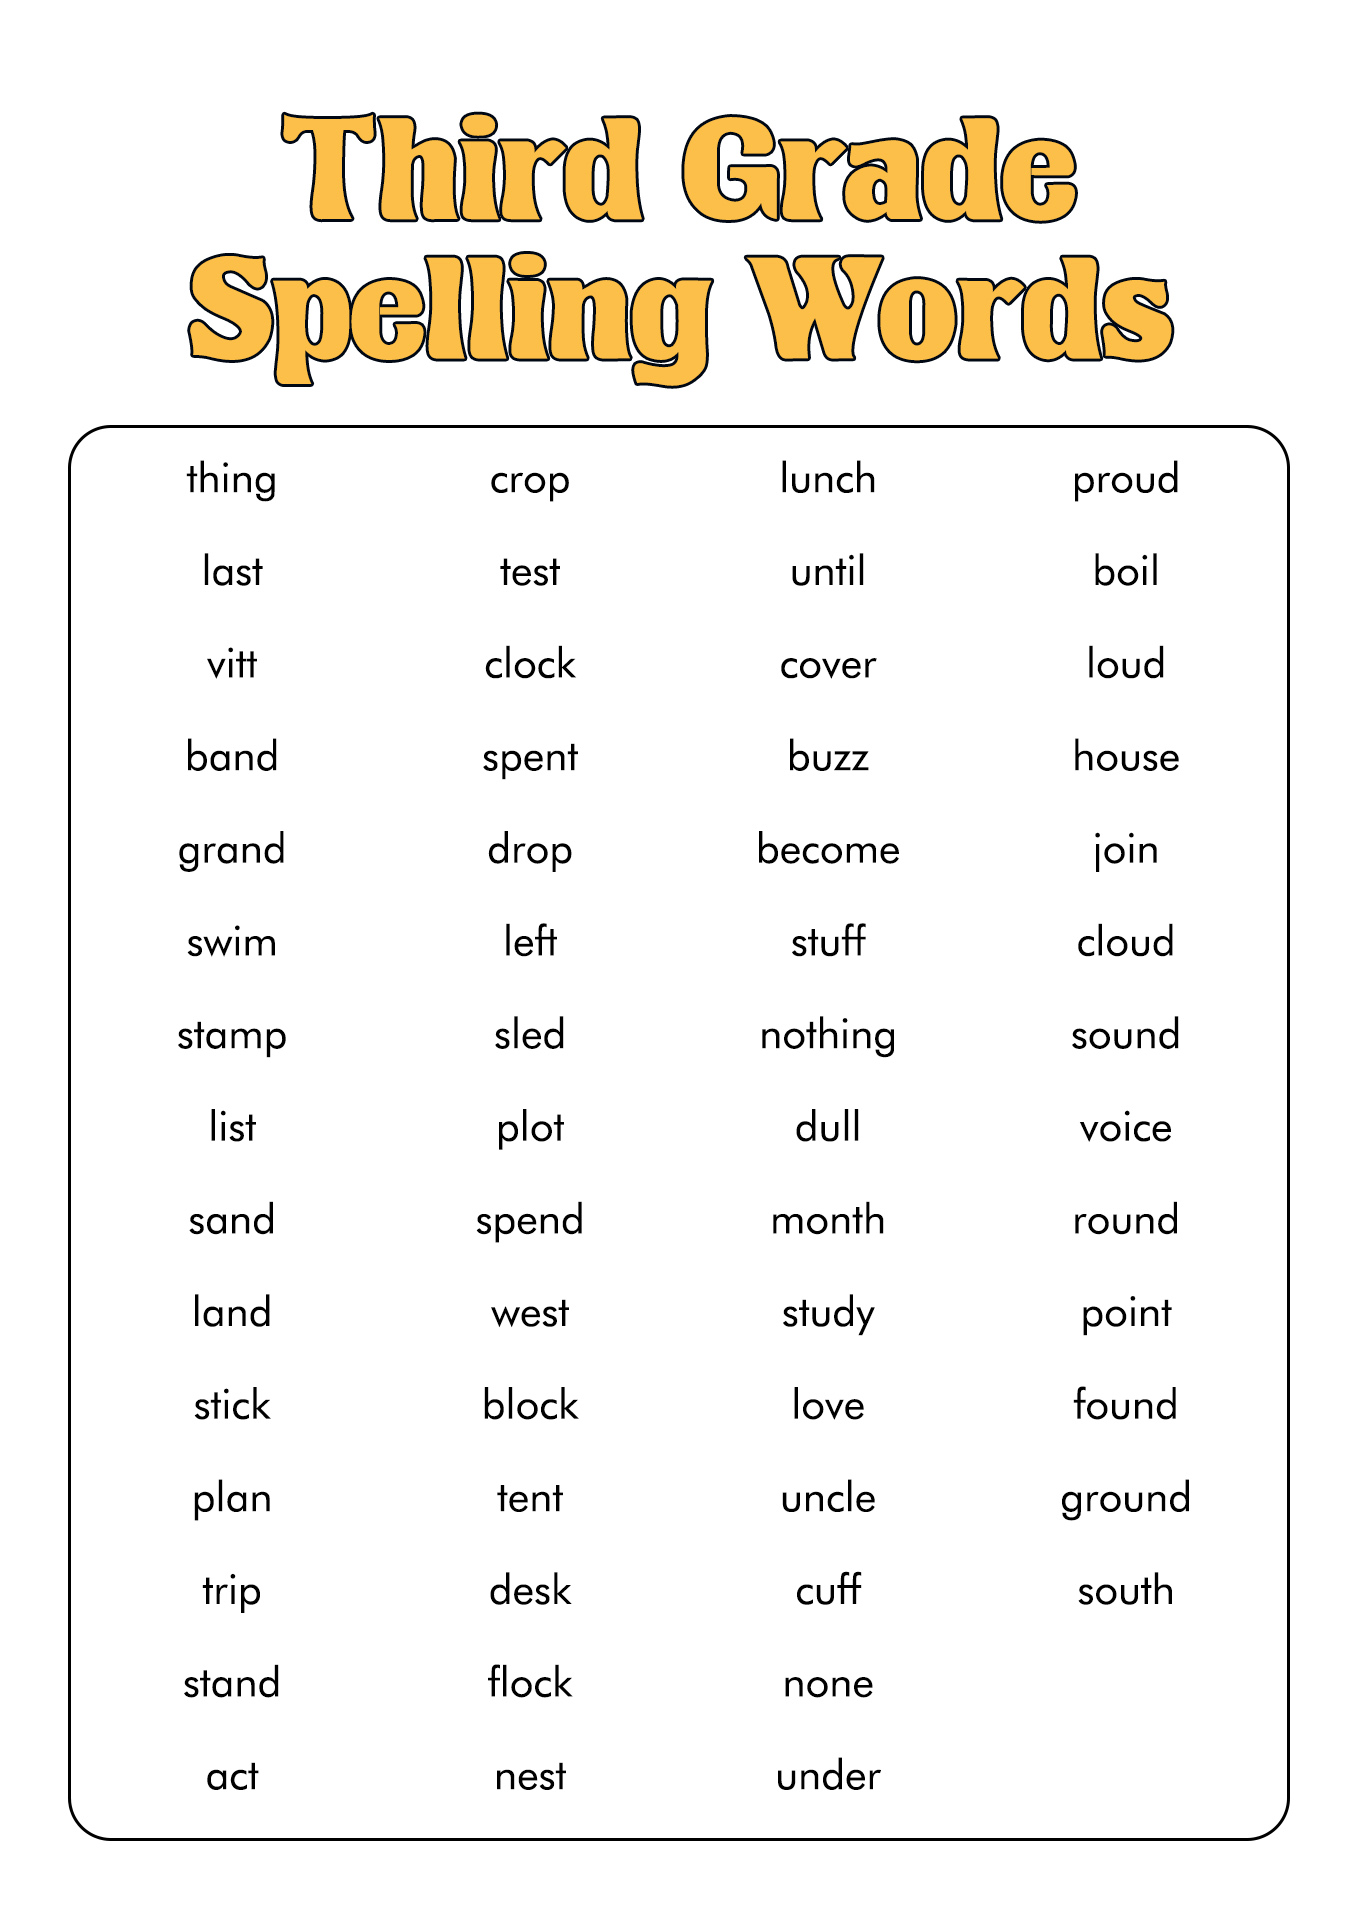 3rd Grade Spelling Words List Image